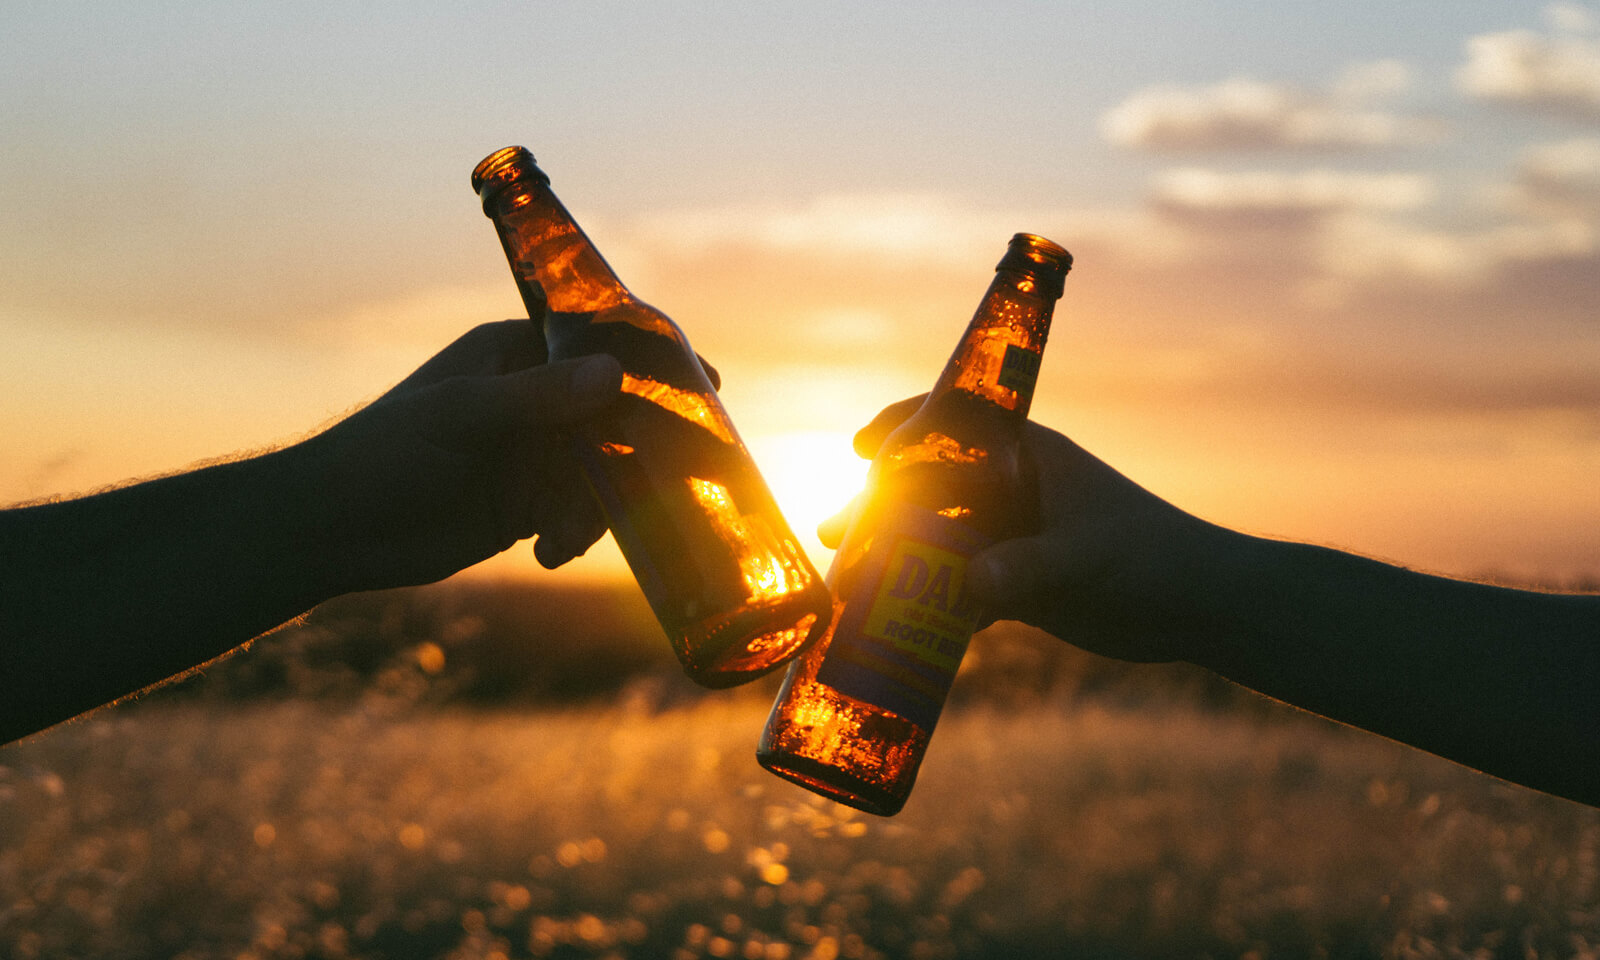 beer bottles clinking together in front of sunset